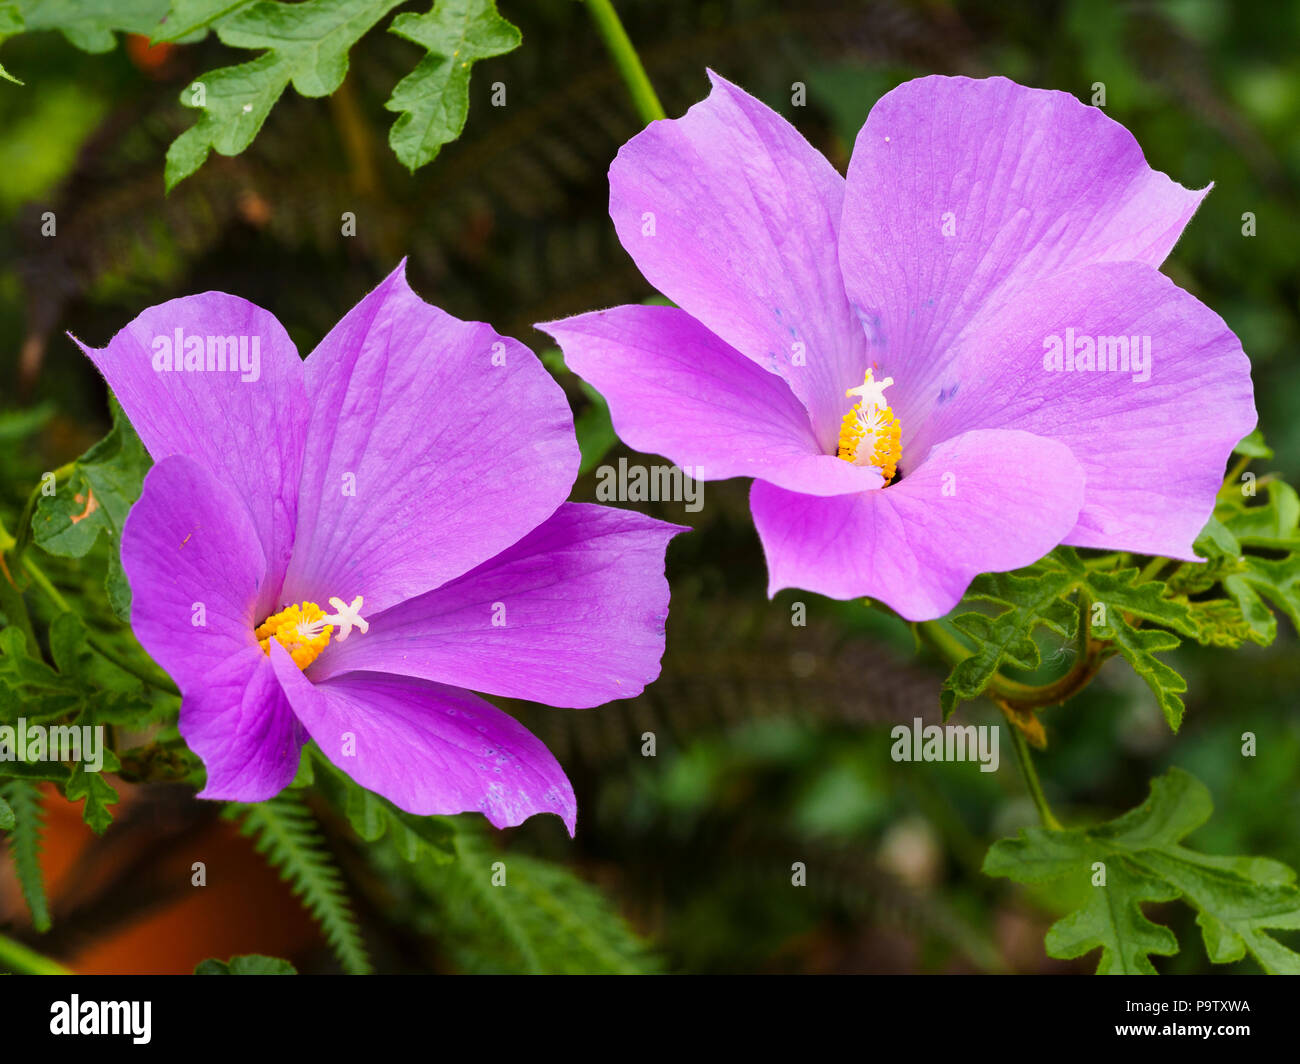 Lilac Blue Flowers Of The Australian Evergreen Blue Hibiscus Shrub Alyogyne Huegelii Santa Cruz Stock Photo Alamy